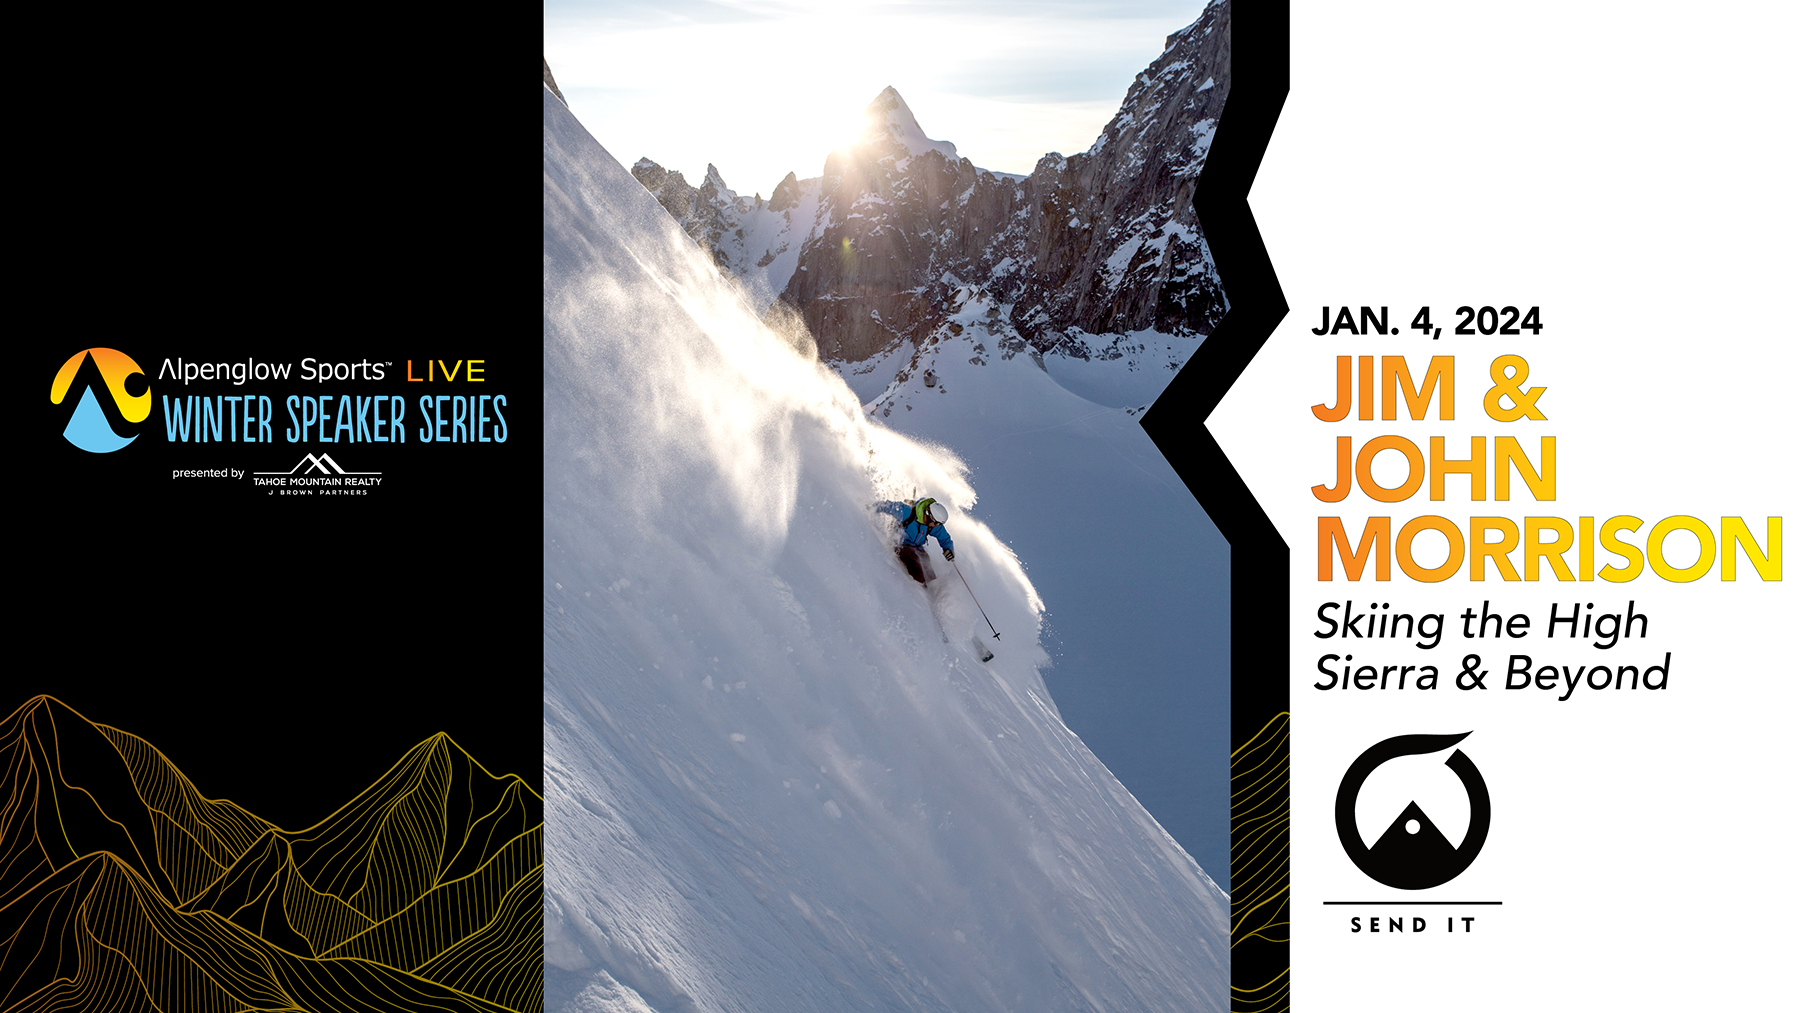 Jim & John Morrison's Skiing the High Sierra and Beyond